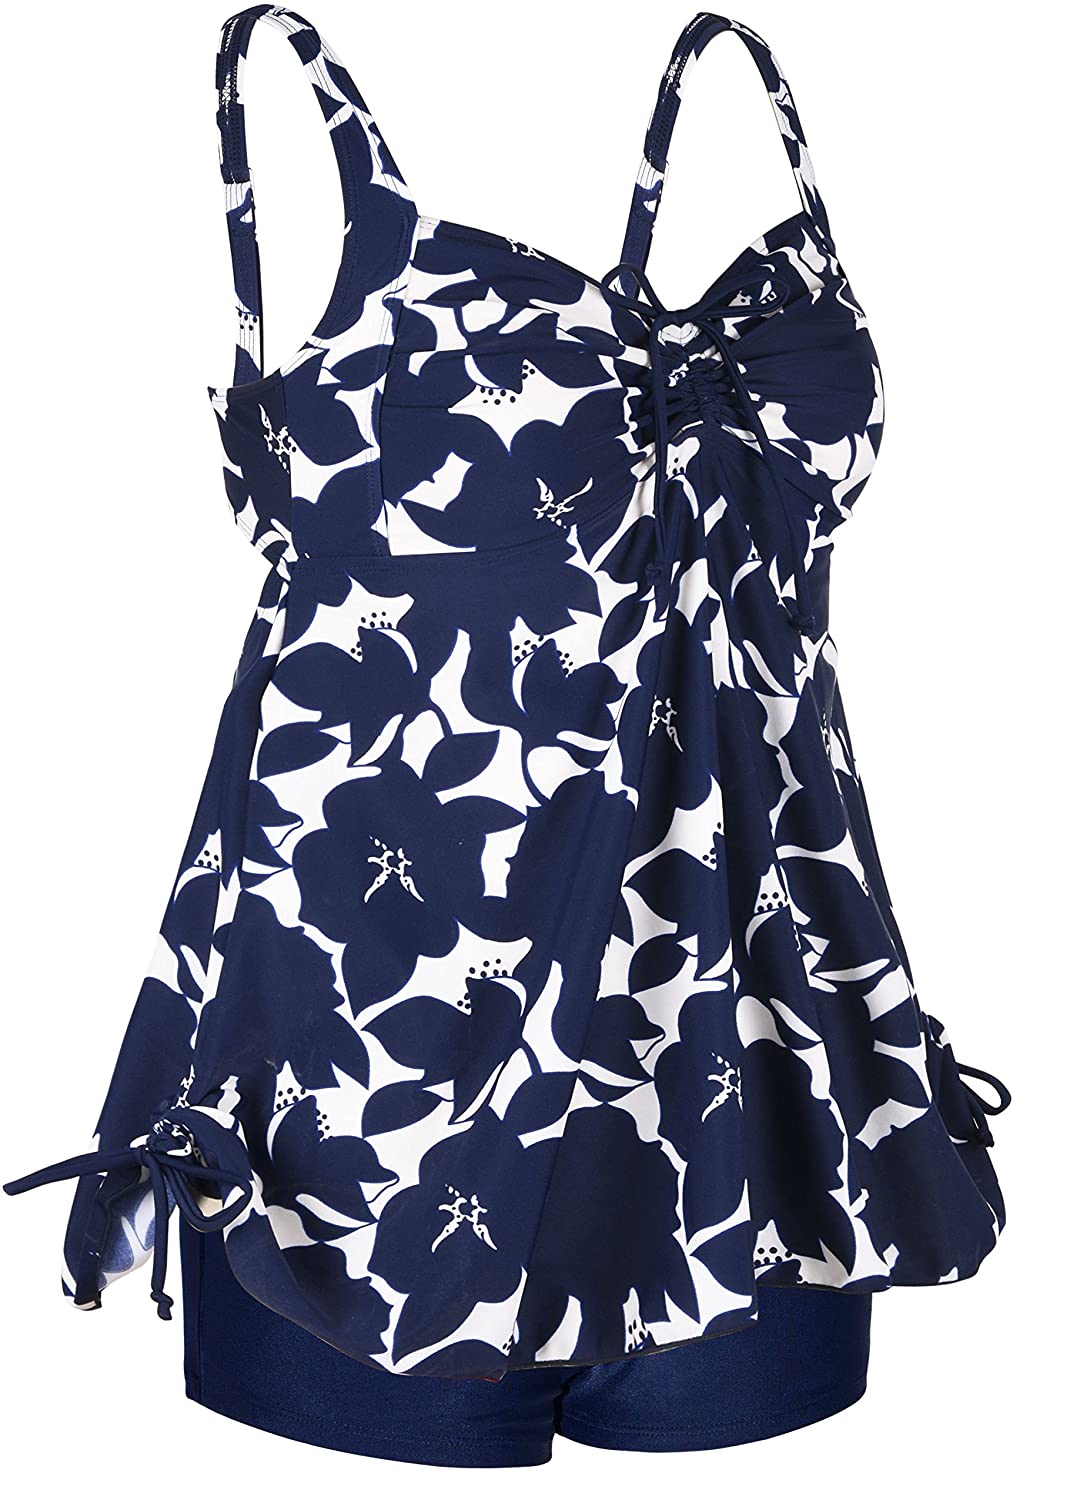 Septangle Women's Plus Size Bathing Suits Paisley Print Two Piece Swimsuit